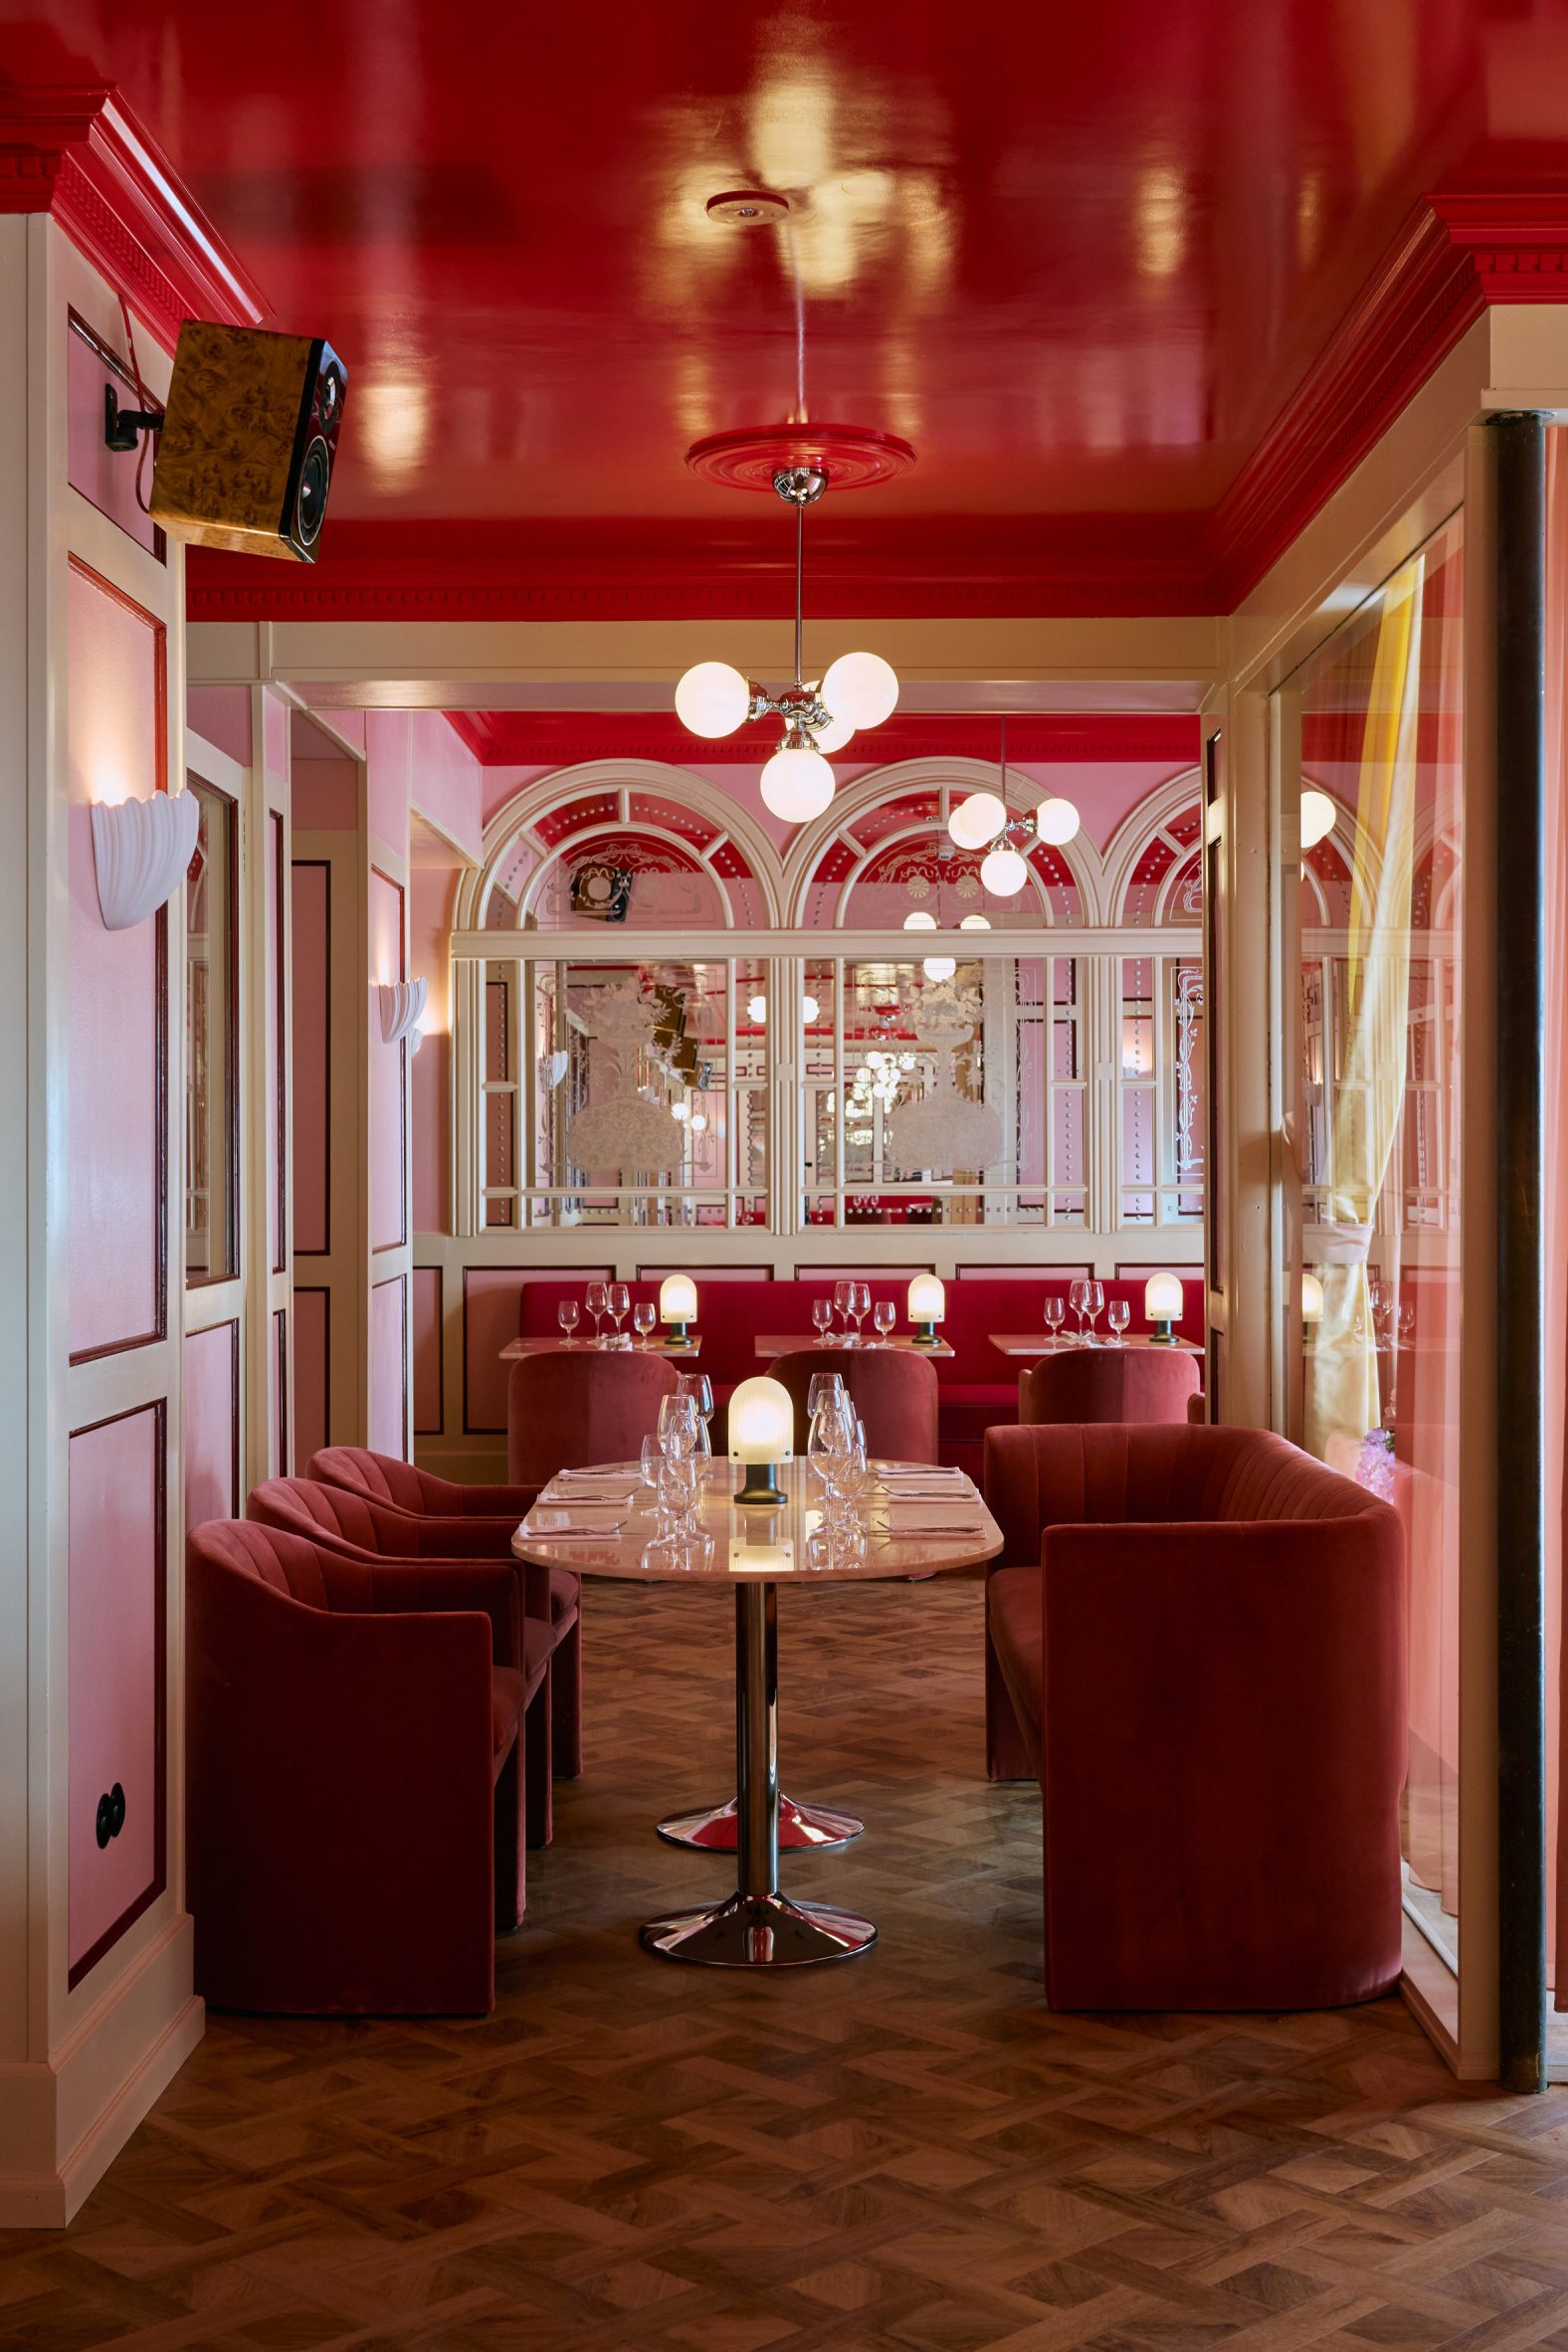 Interior view of Donna restaurant by Tonen